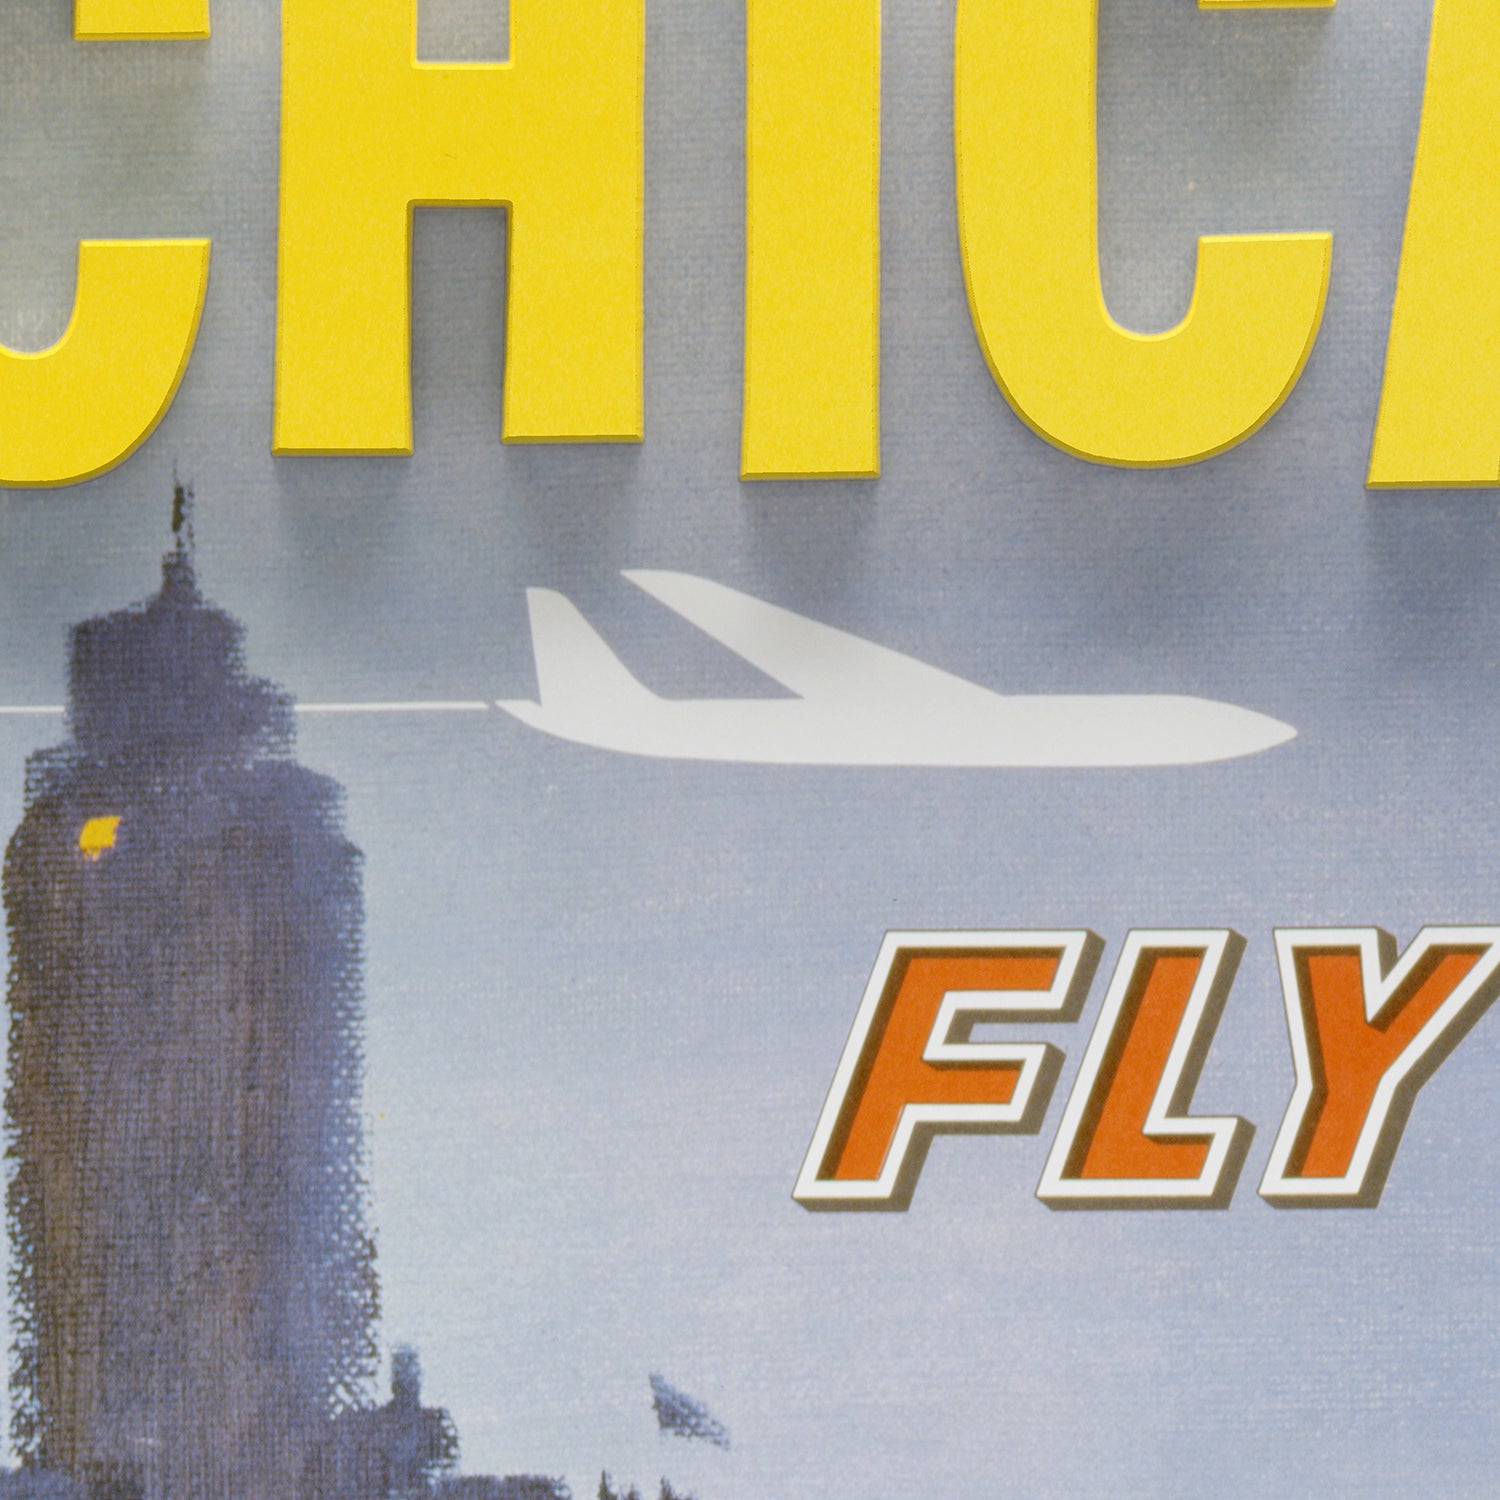 TWA Airlines Chicago (1960) - Retro Art Print